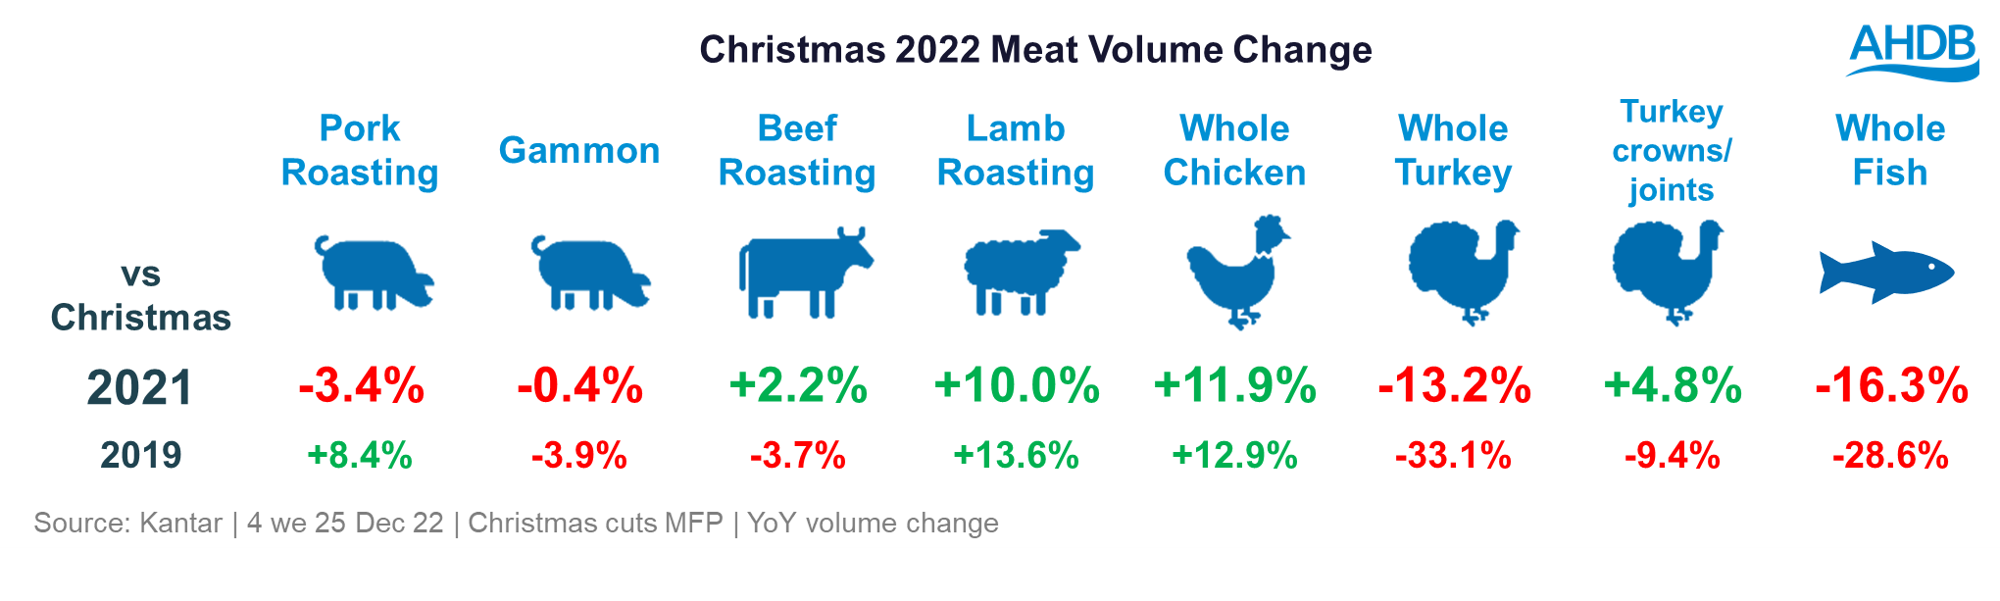 Christmas meal sales performance